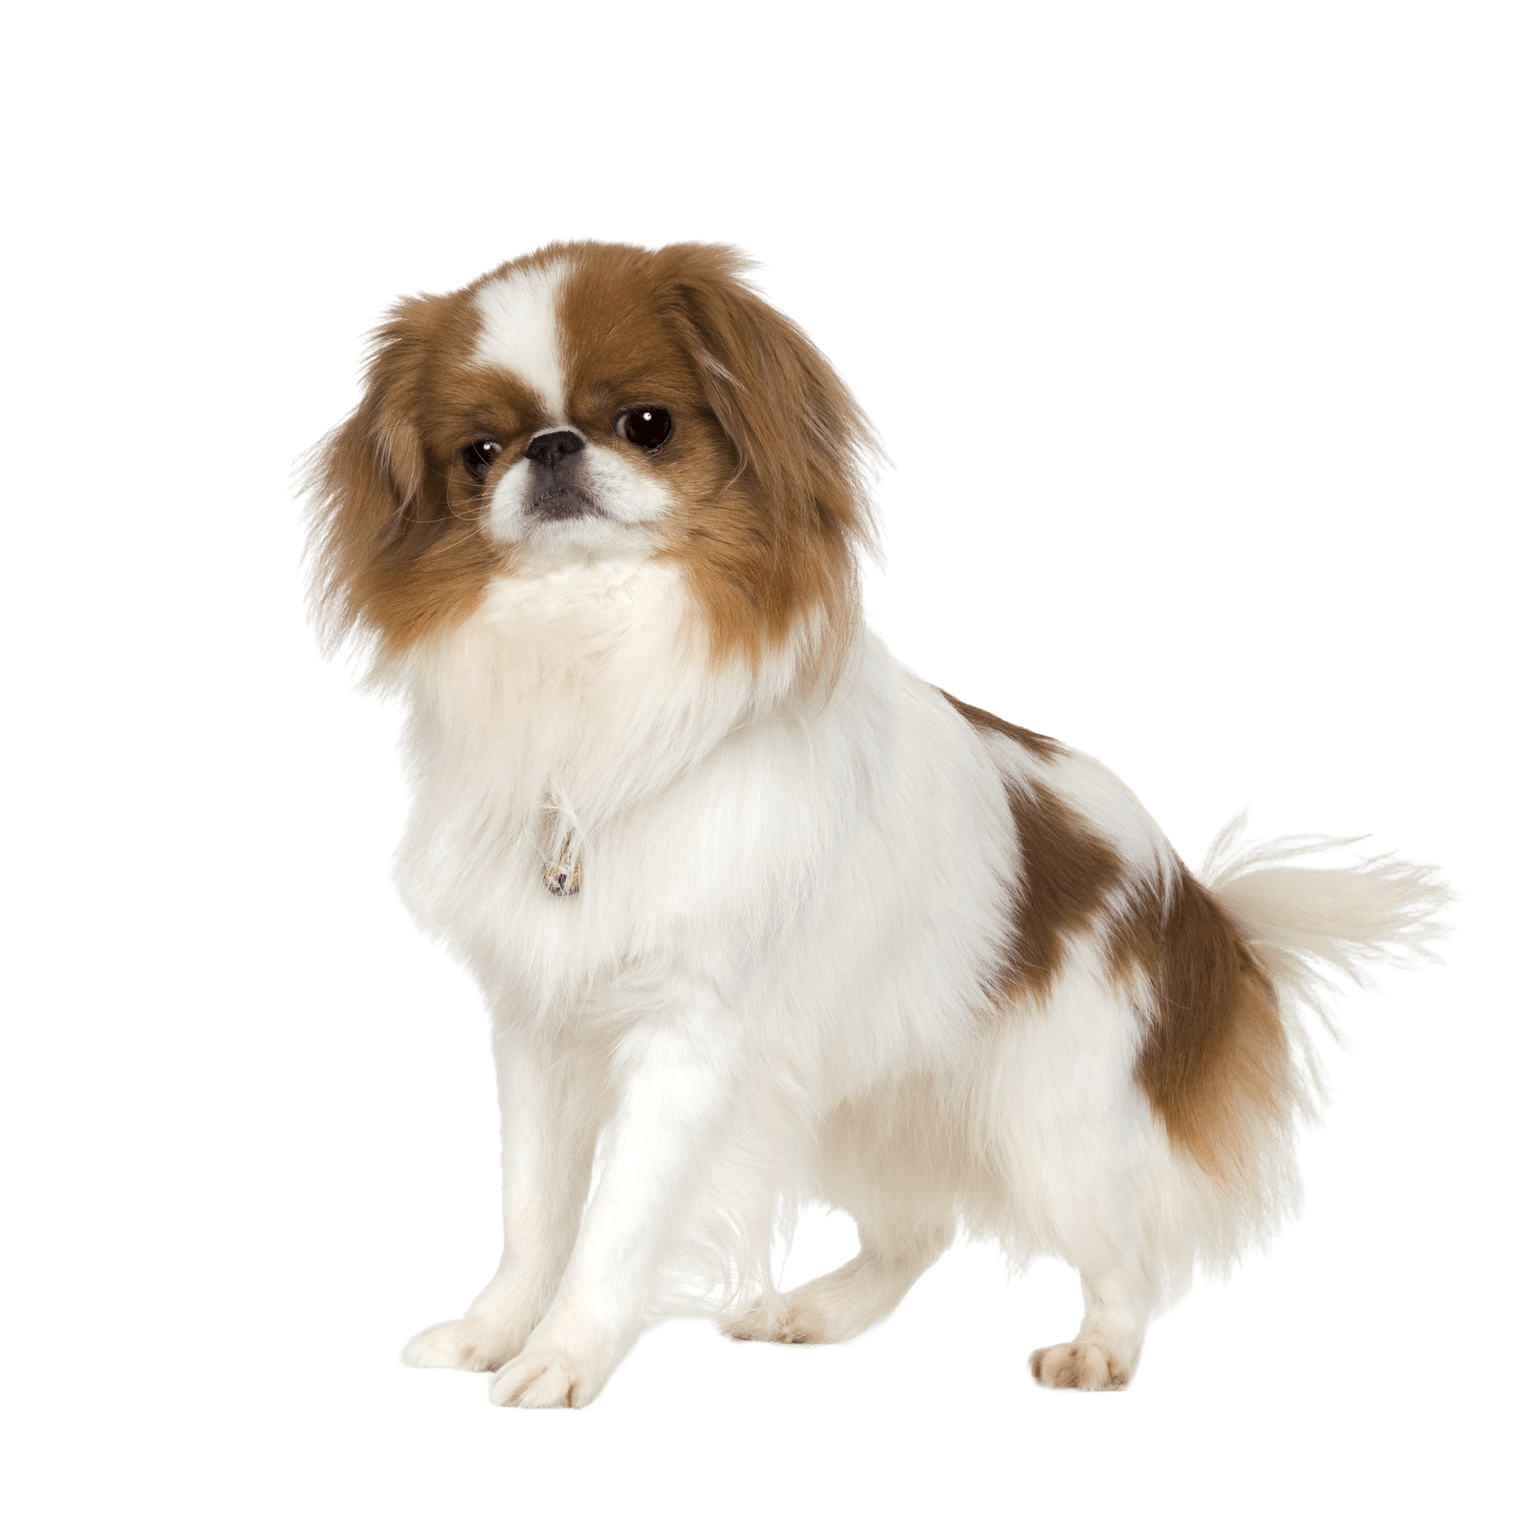 Japan Chin breed description, temperament, calm dog breed for seniors, dog for children, dog fond of children, well-behaved calm dog for beginners